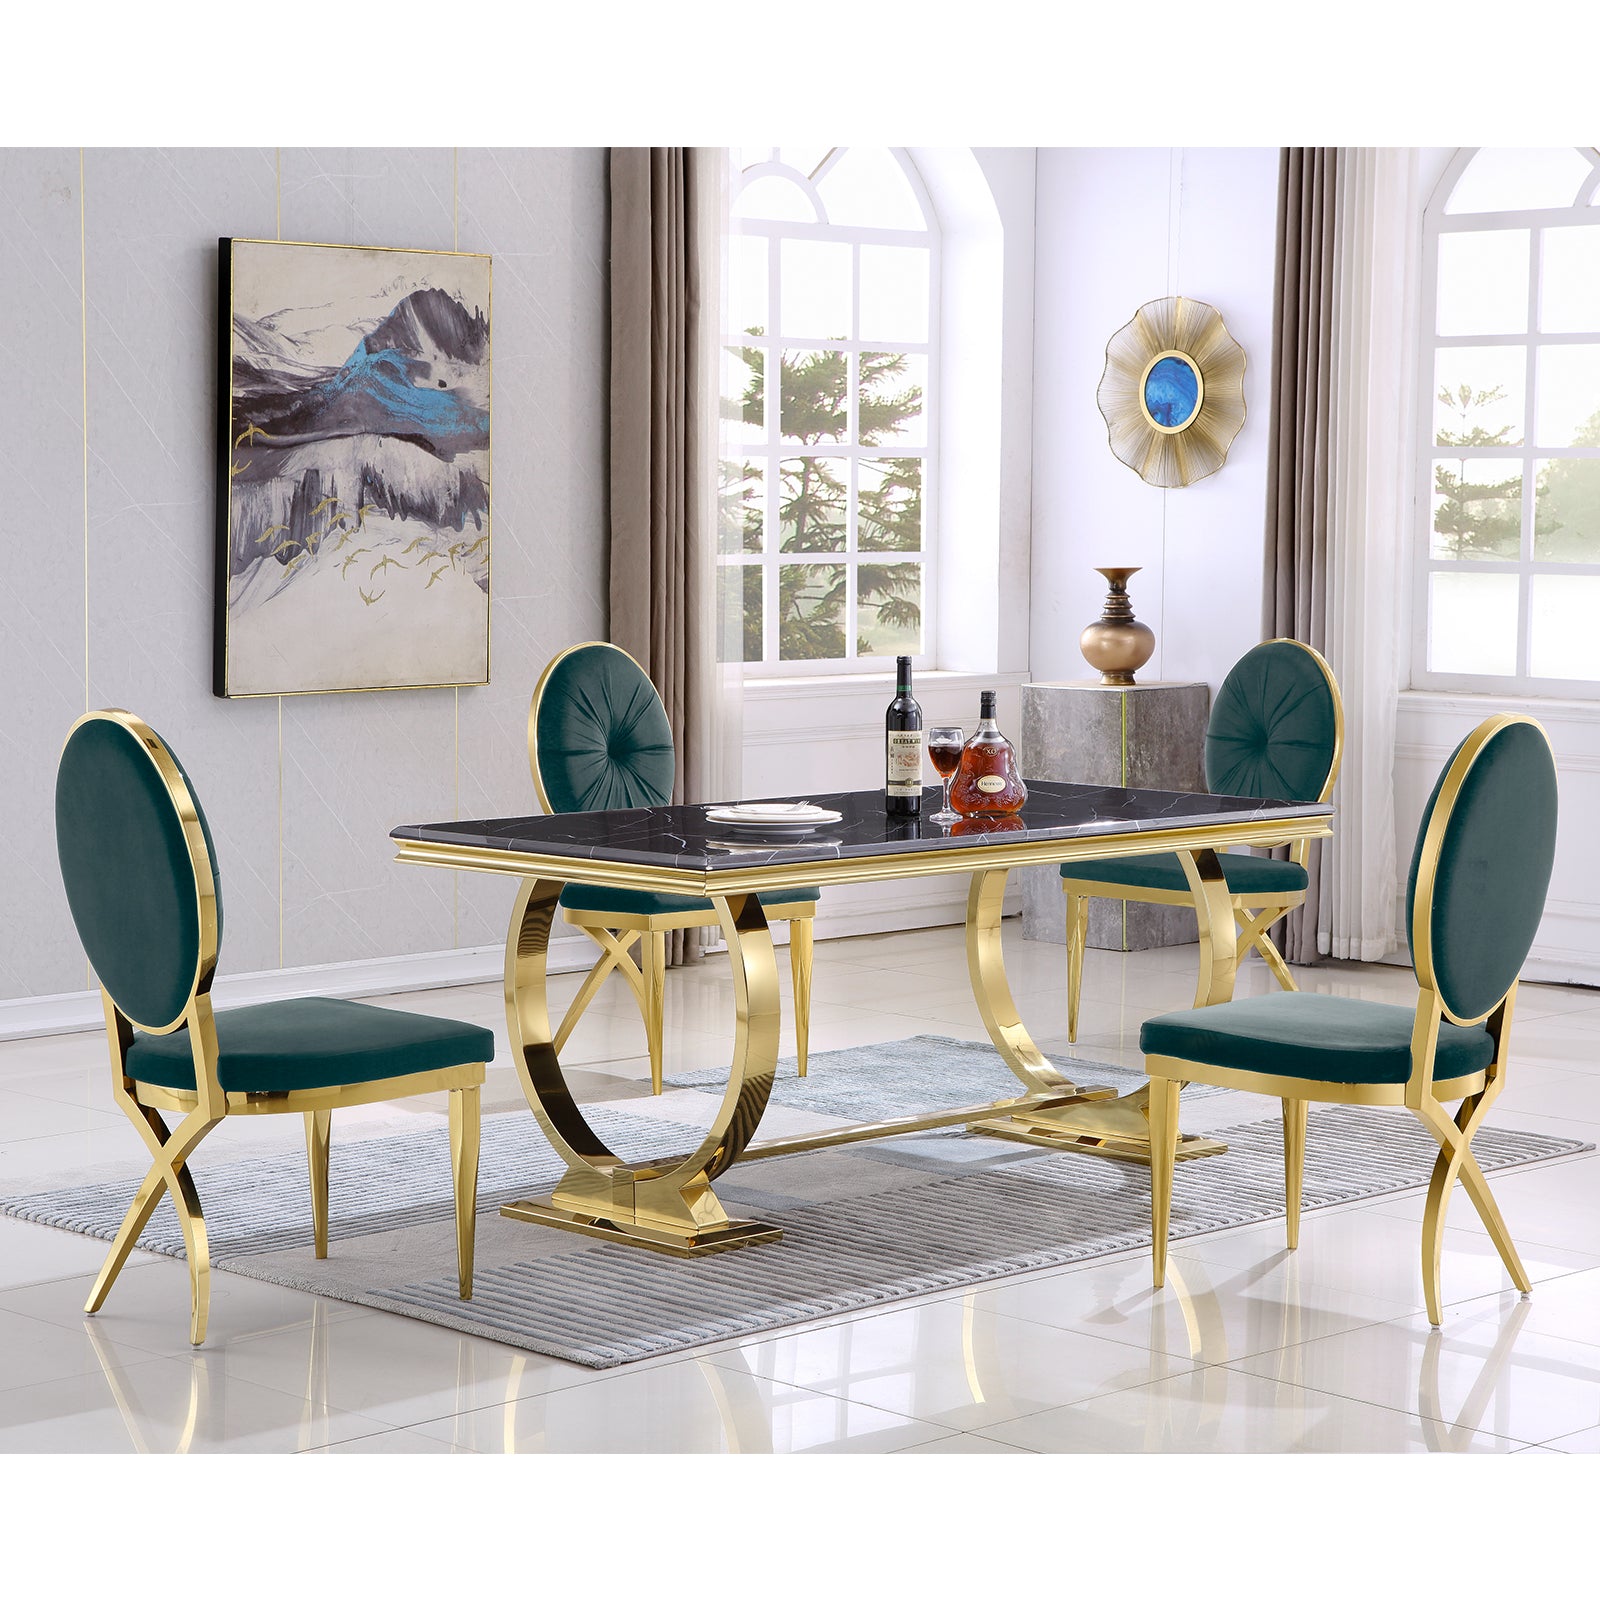 King Louis dining chairs | Dark green Velvet | Metal legs | C115